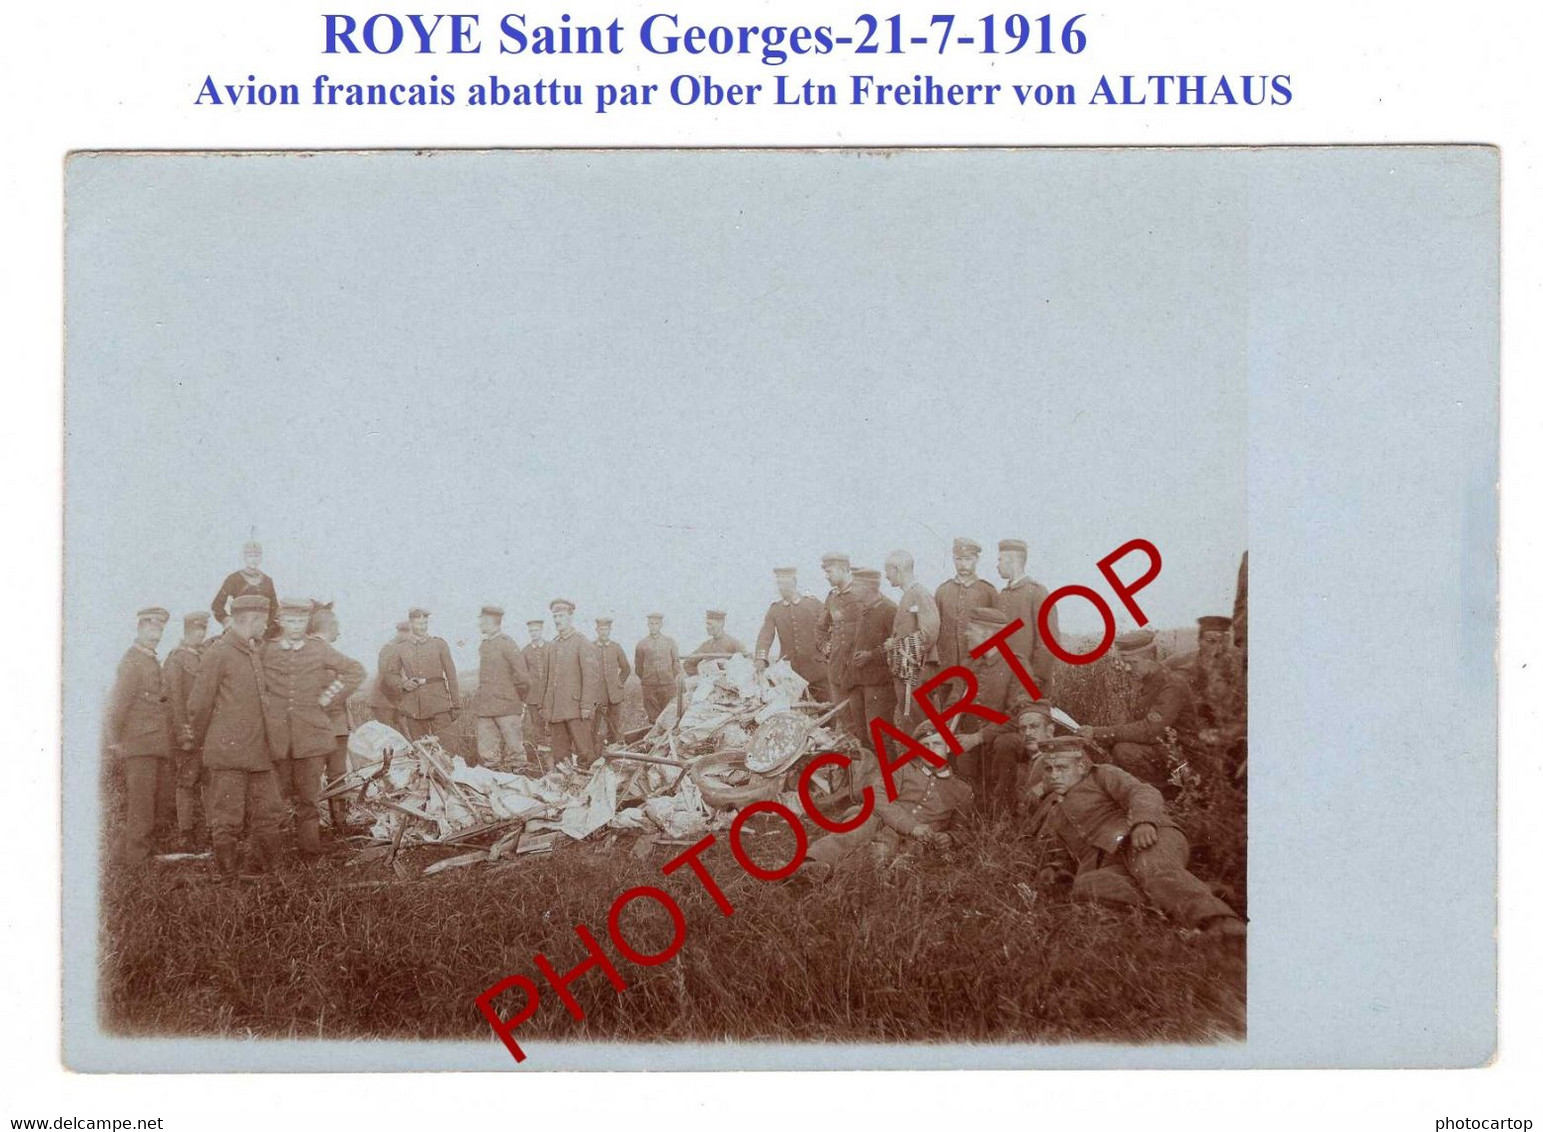 Avion Abattu-ROYE-St GEORGES-21-7-16-O.Ltn VON ALTHAUS-CARTE PHOTO All.-Guerre-14-18-1 WK-Militaria-Aviation-Fliegerei- - 1914-1918: 1ère Guerre